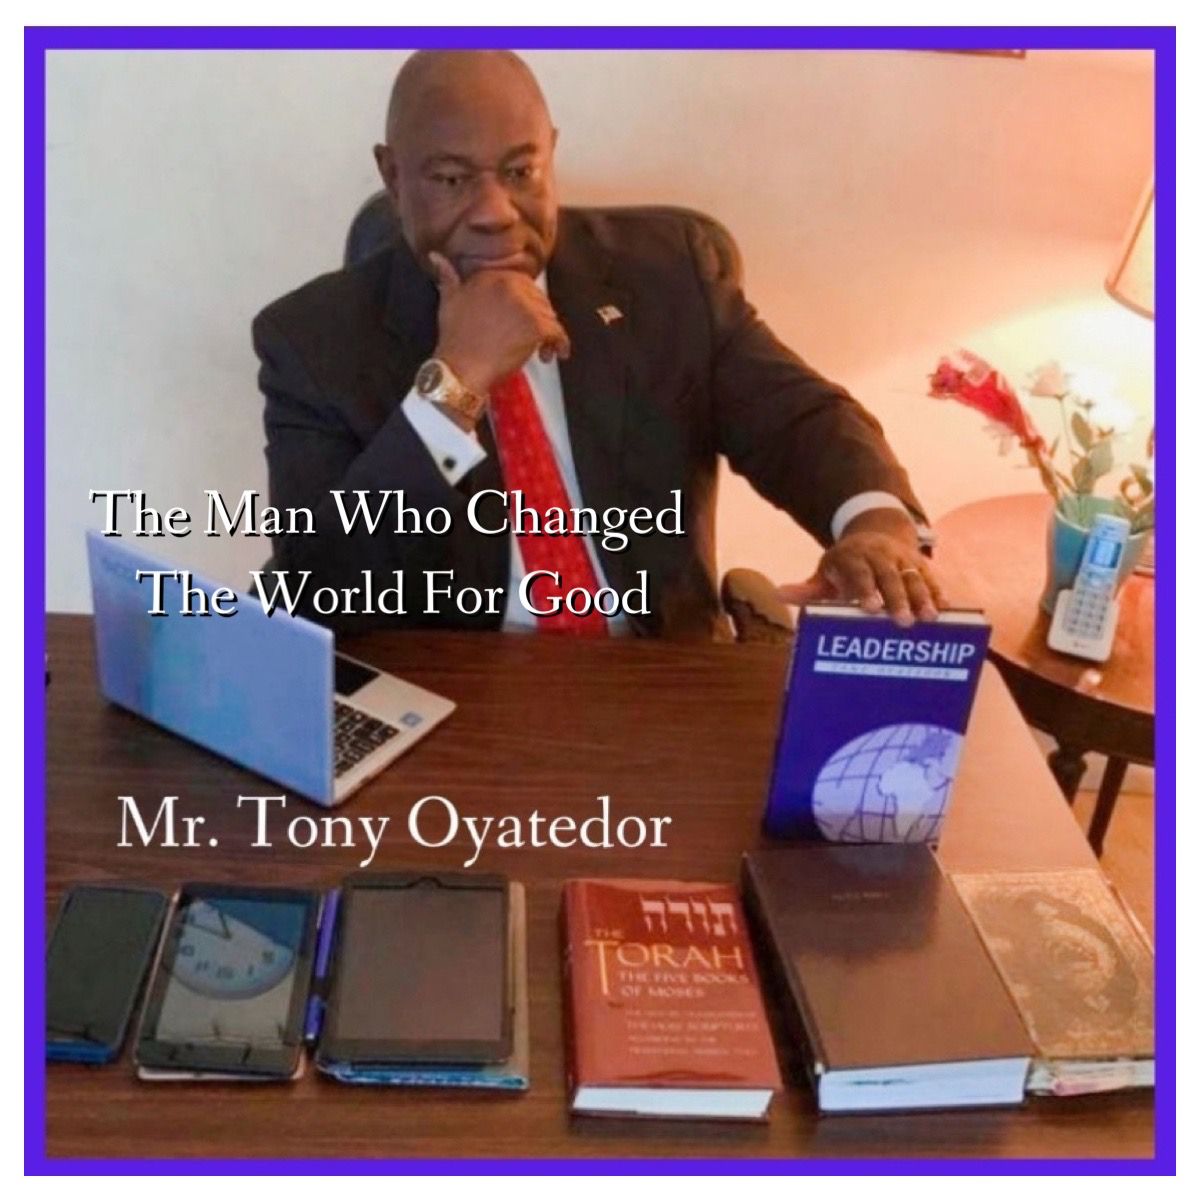 Mr. Tony Oyatedor